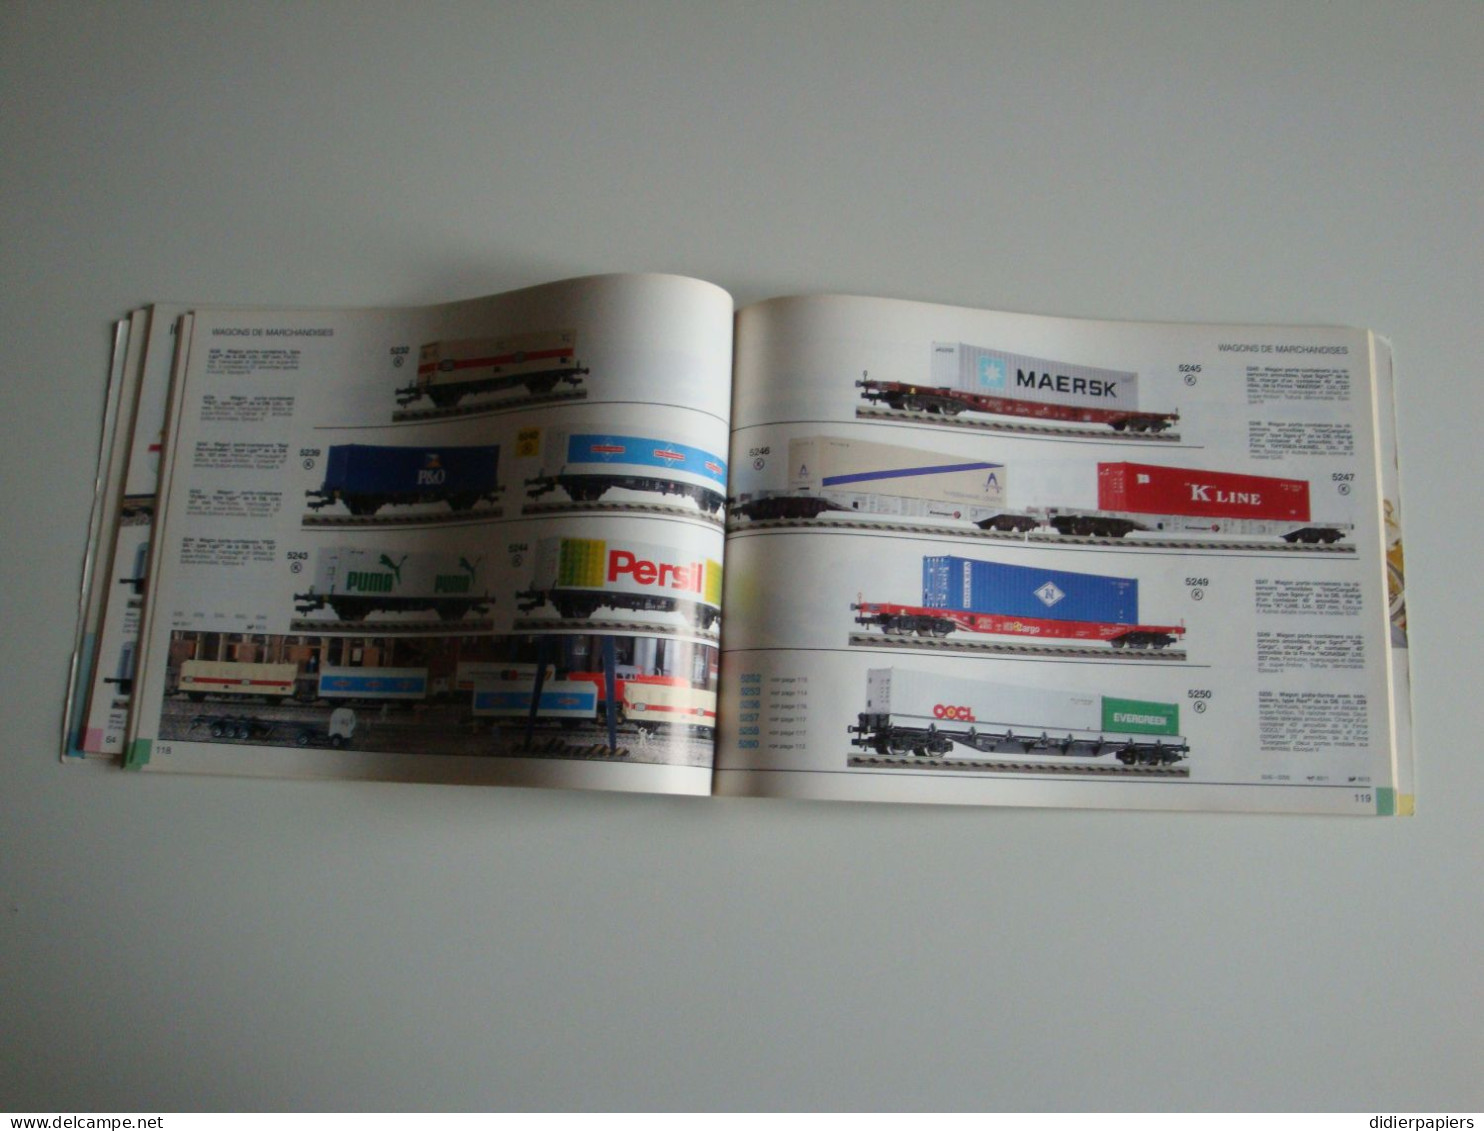 Modélisme trains, Important catalogue FLEISCHMANN 99-2000